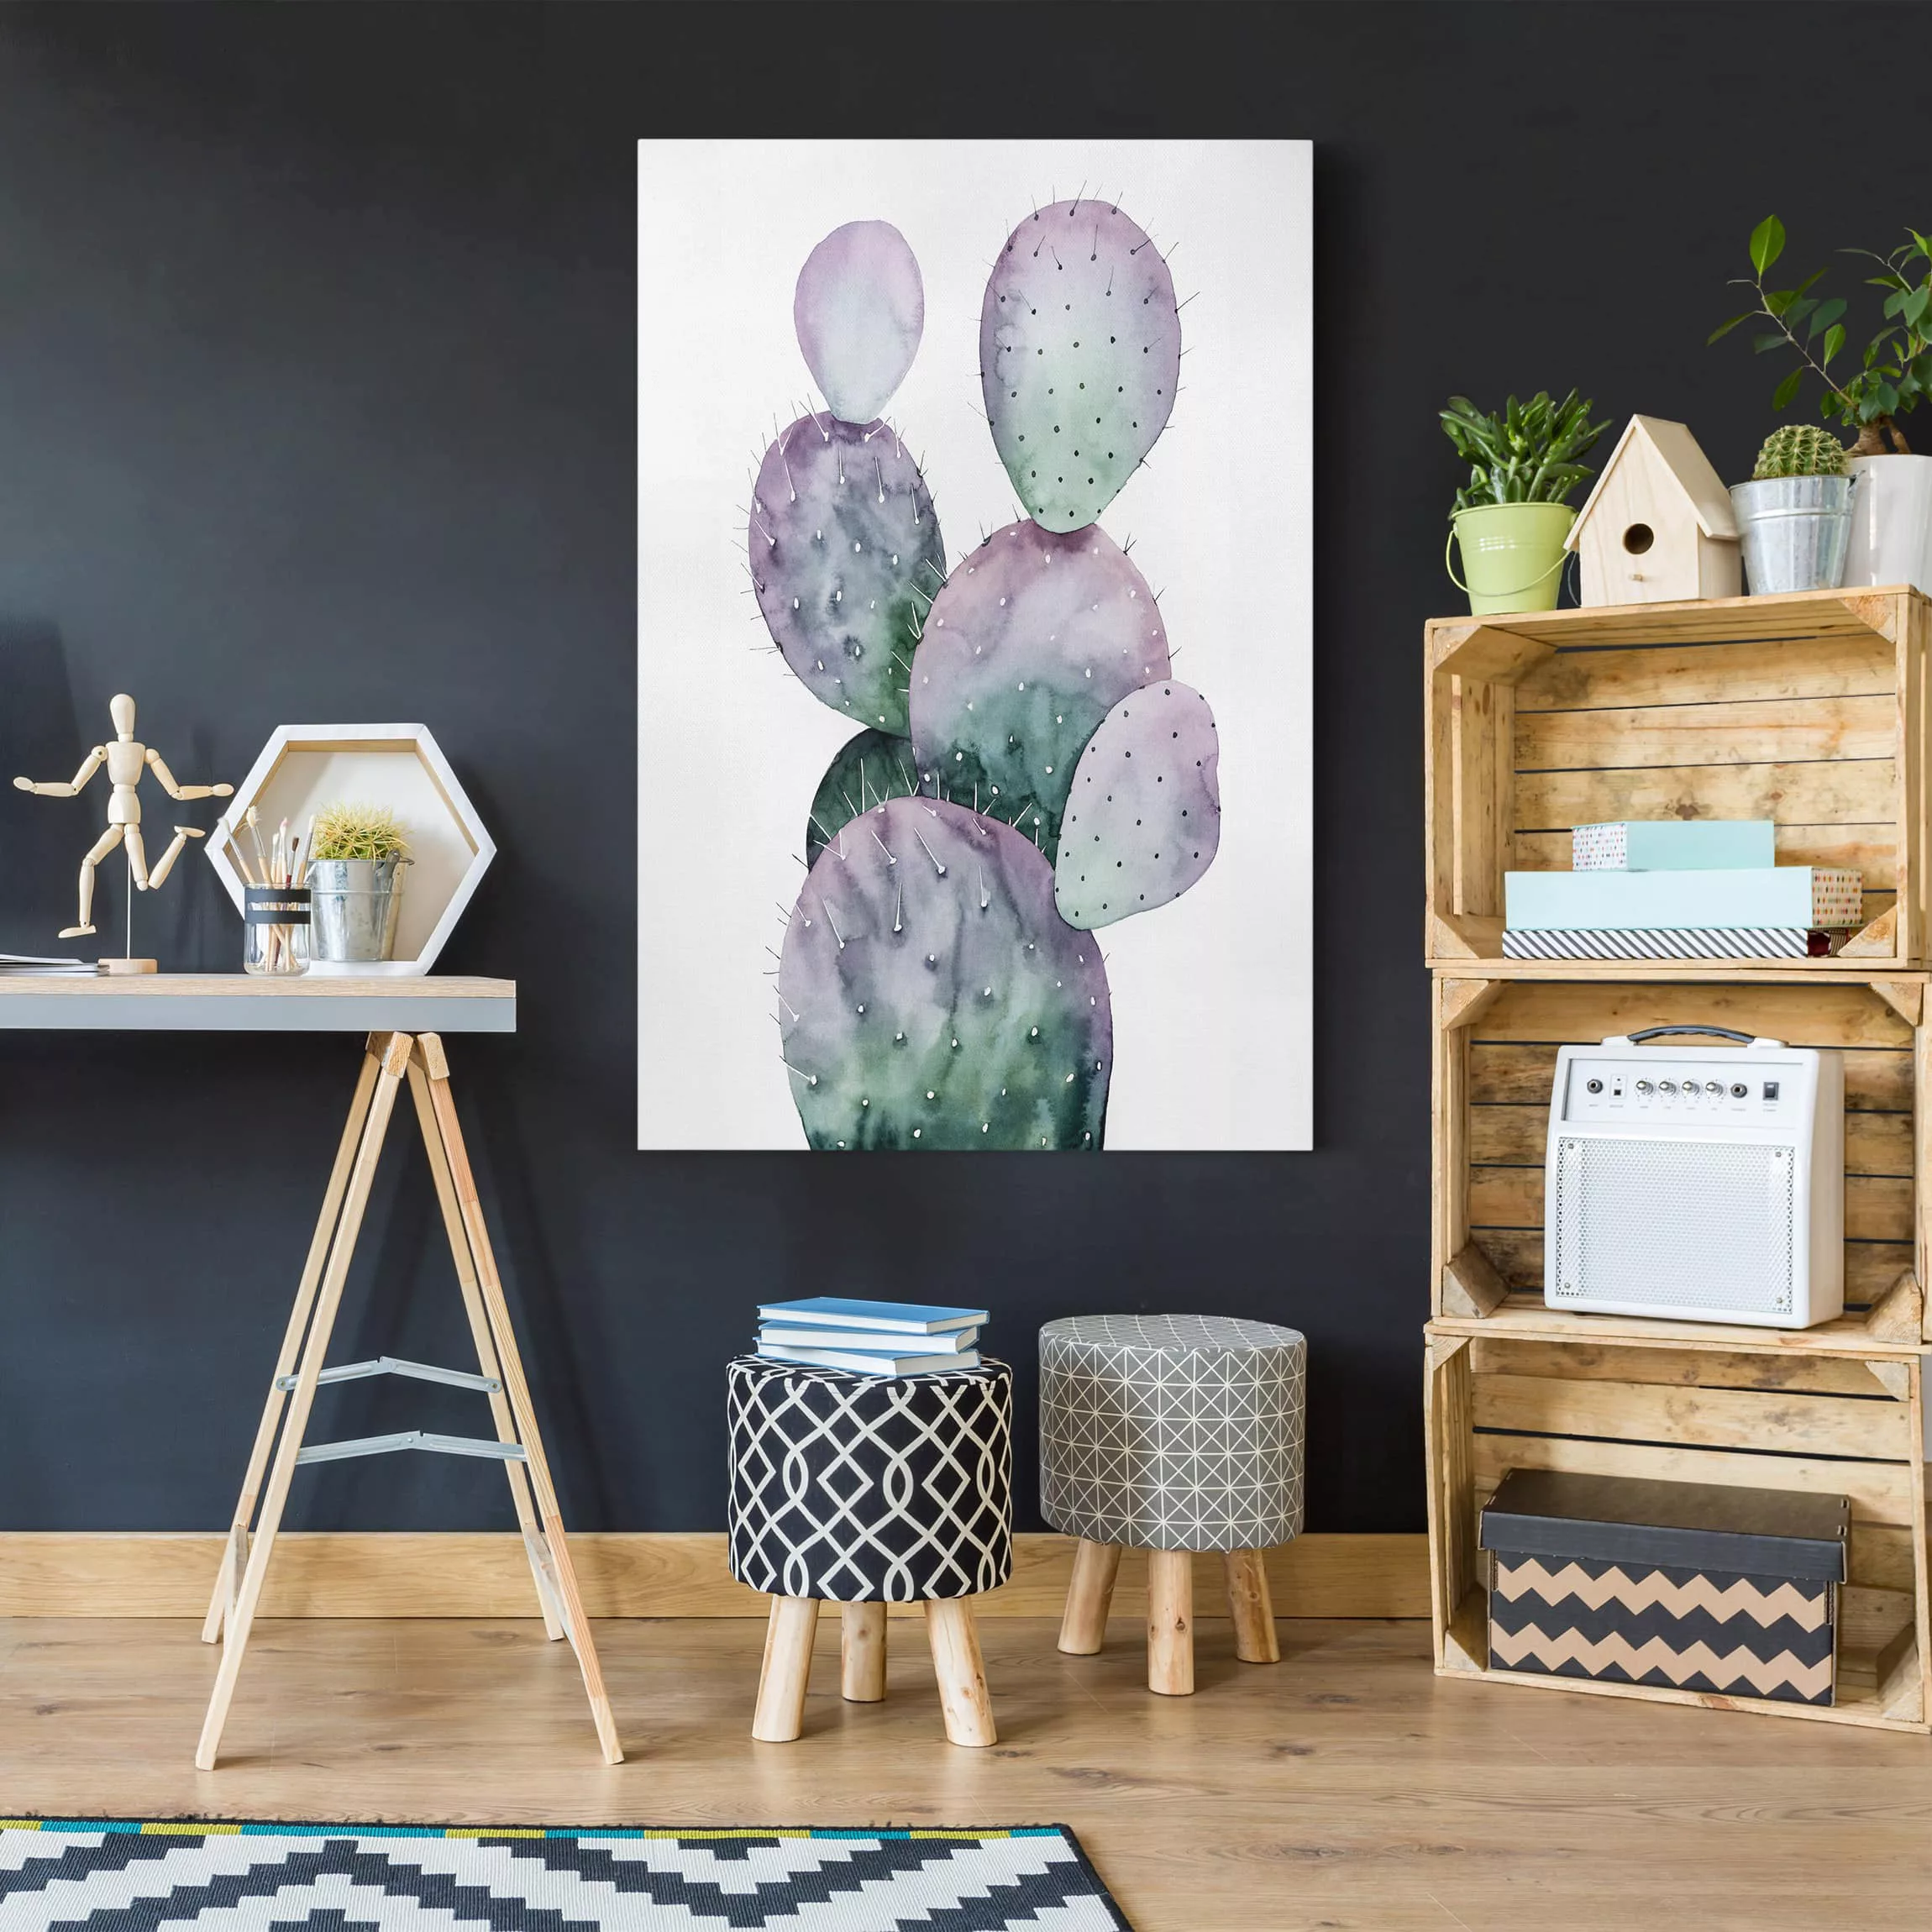 Leinwandbild Botanik - Hochformat Kaktus in Lila II günstig online kaufen